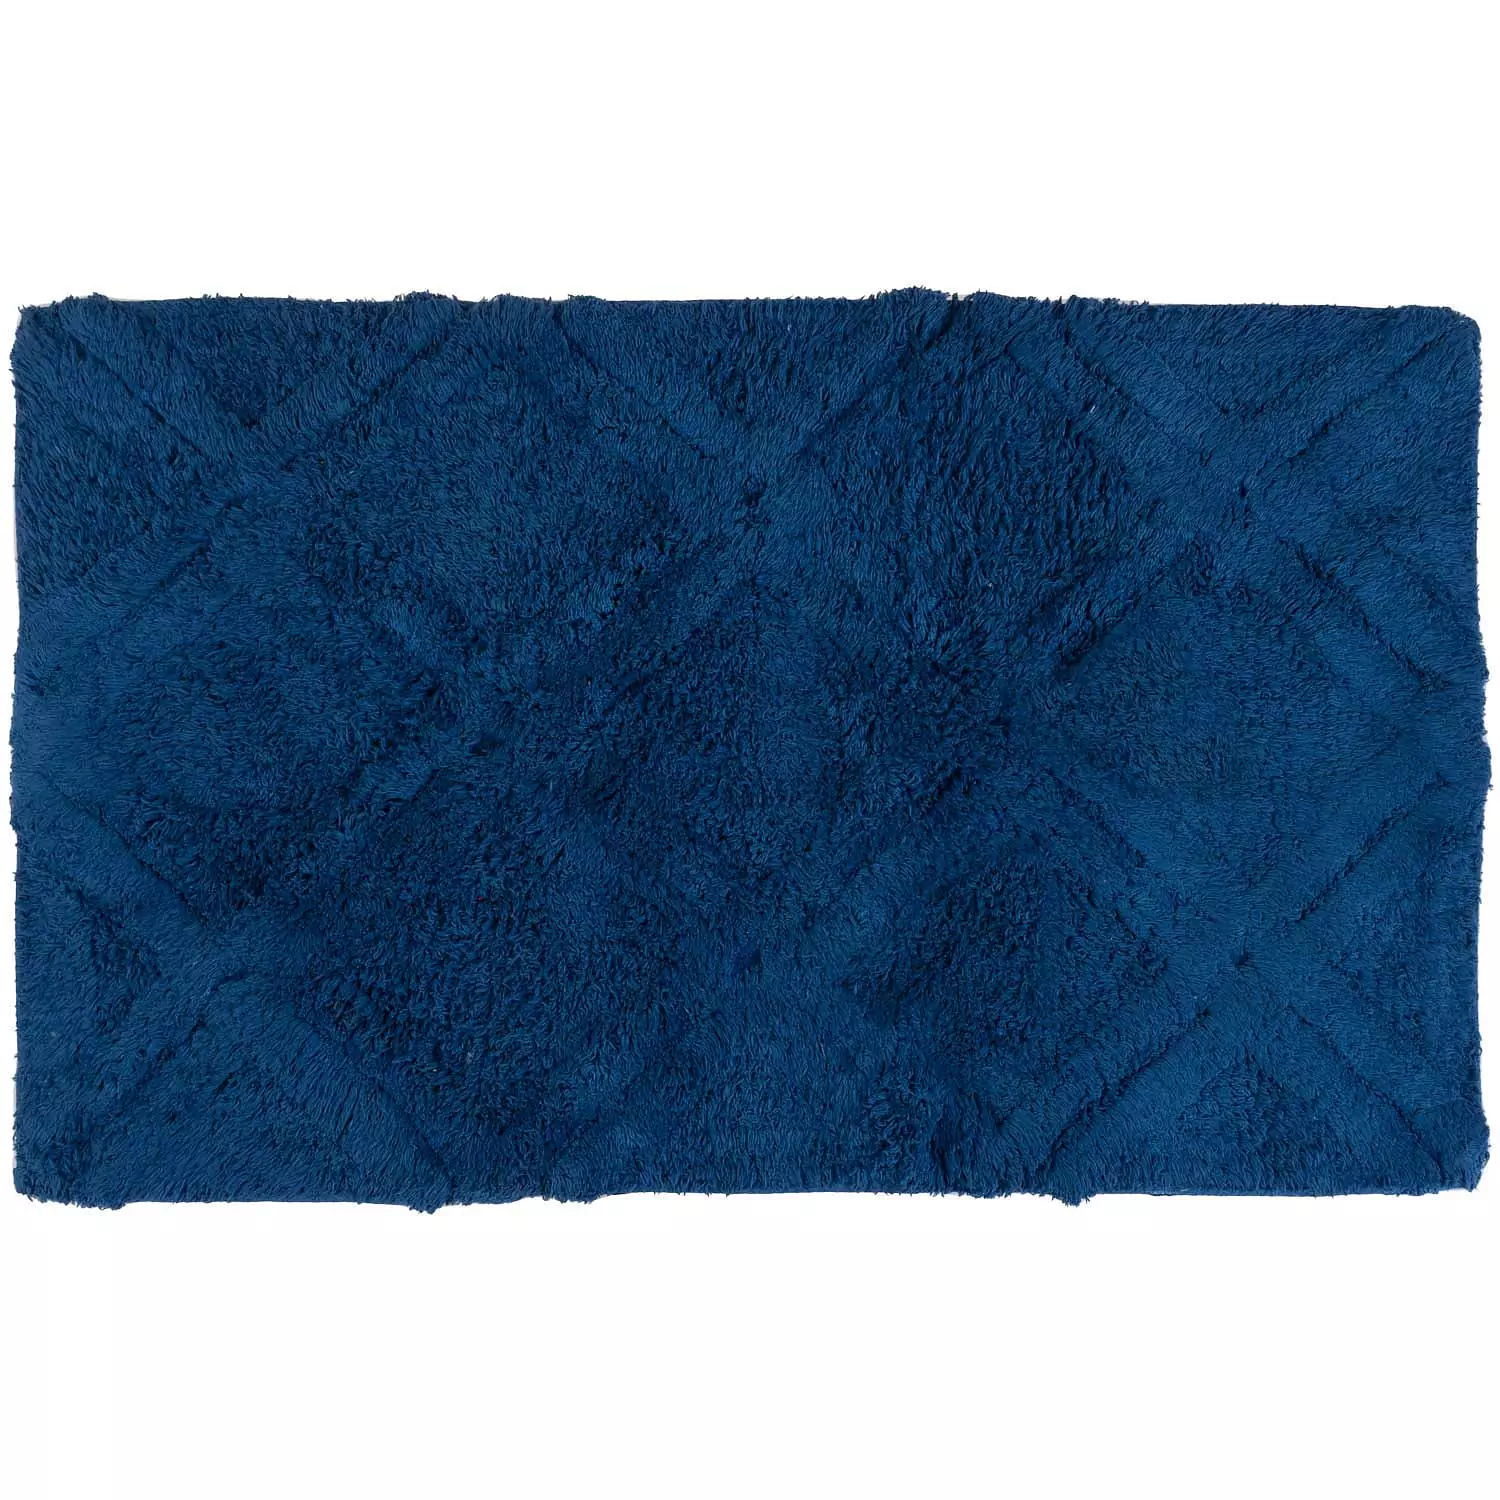 Zen - Bath mat, diamond pattern, 18" x 30", blue